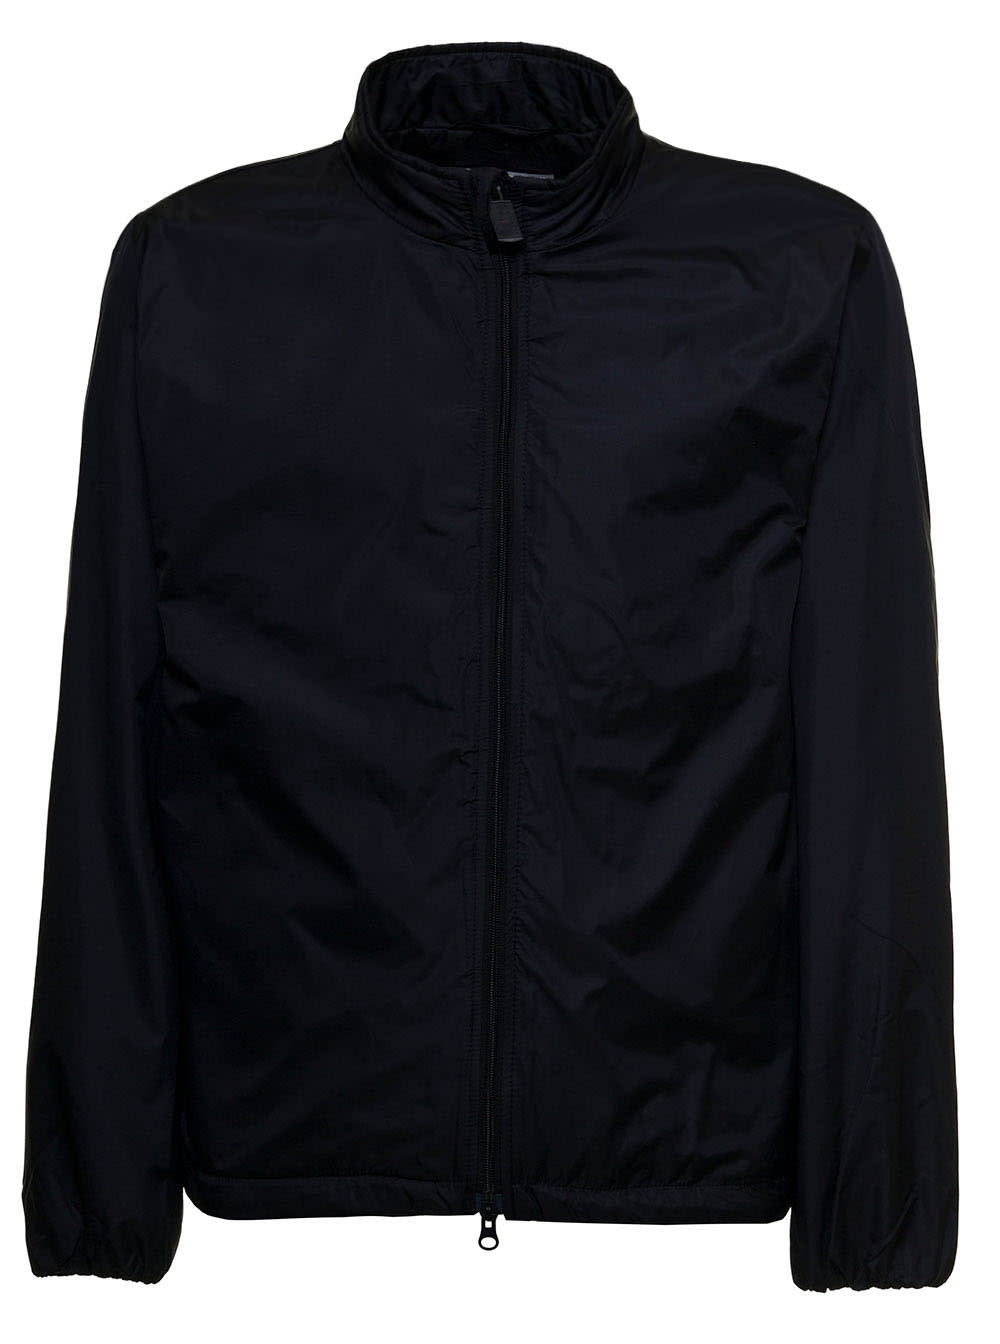 Aspesi Jilong Black Nylon Jacket